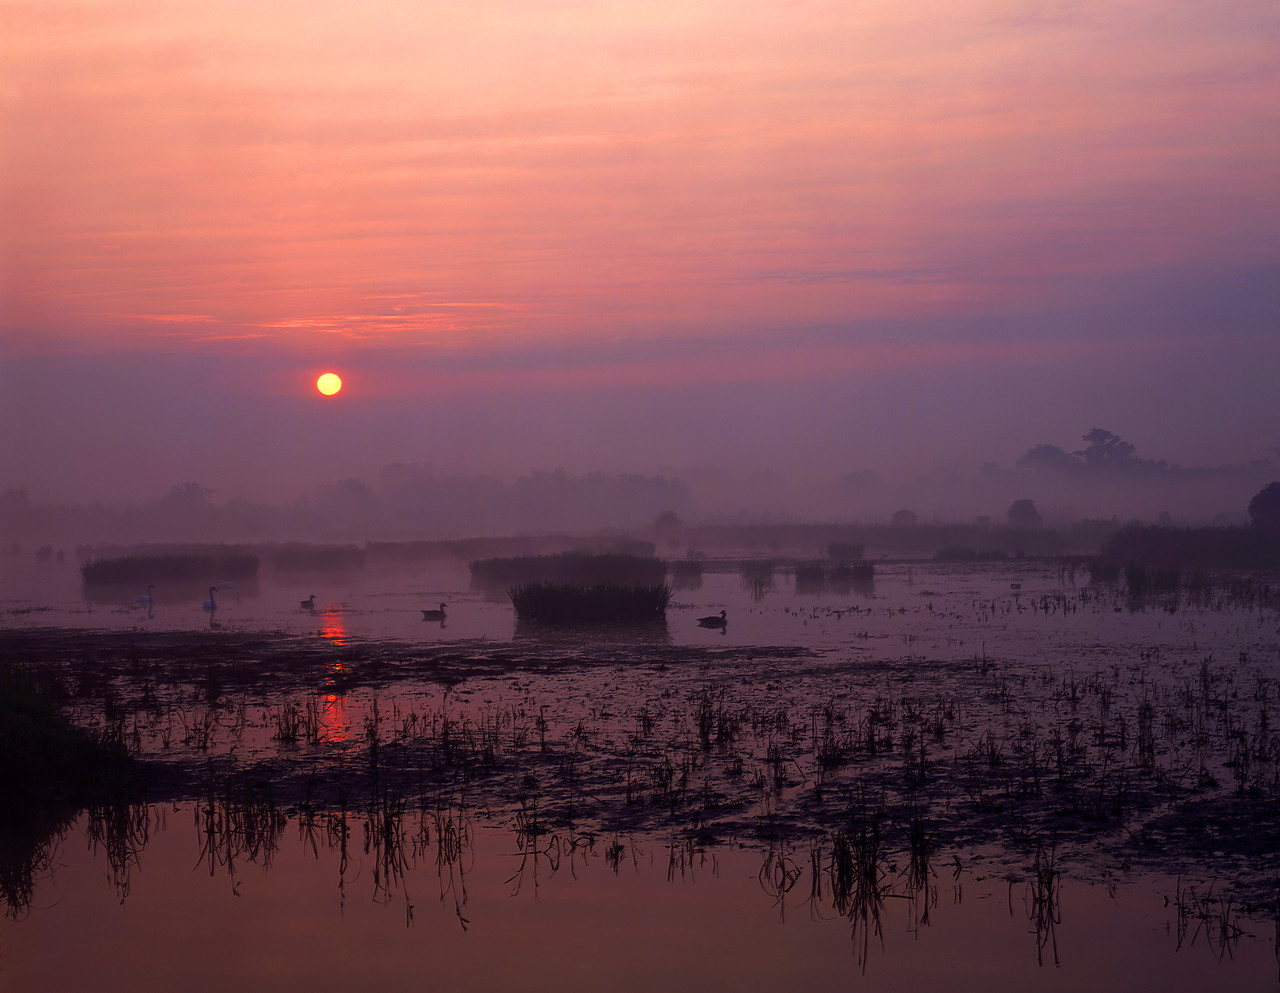 #902809-1 - Sunrise over Marshland, Surlingham, Norfolk, England